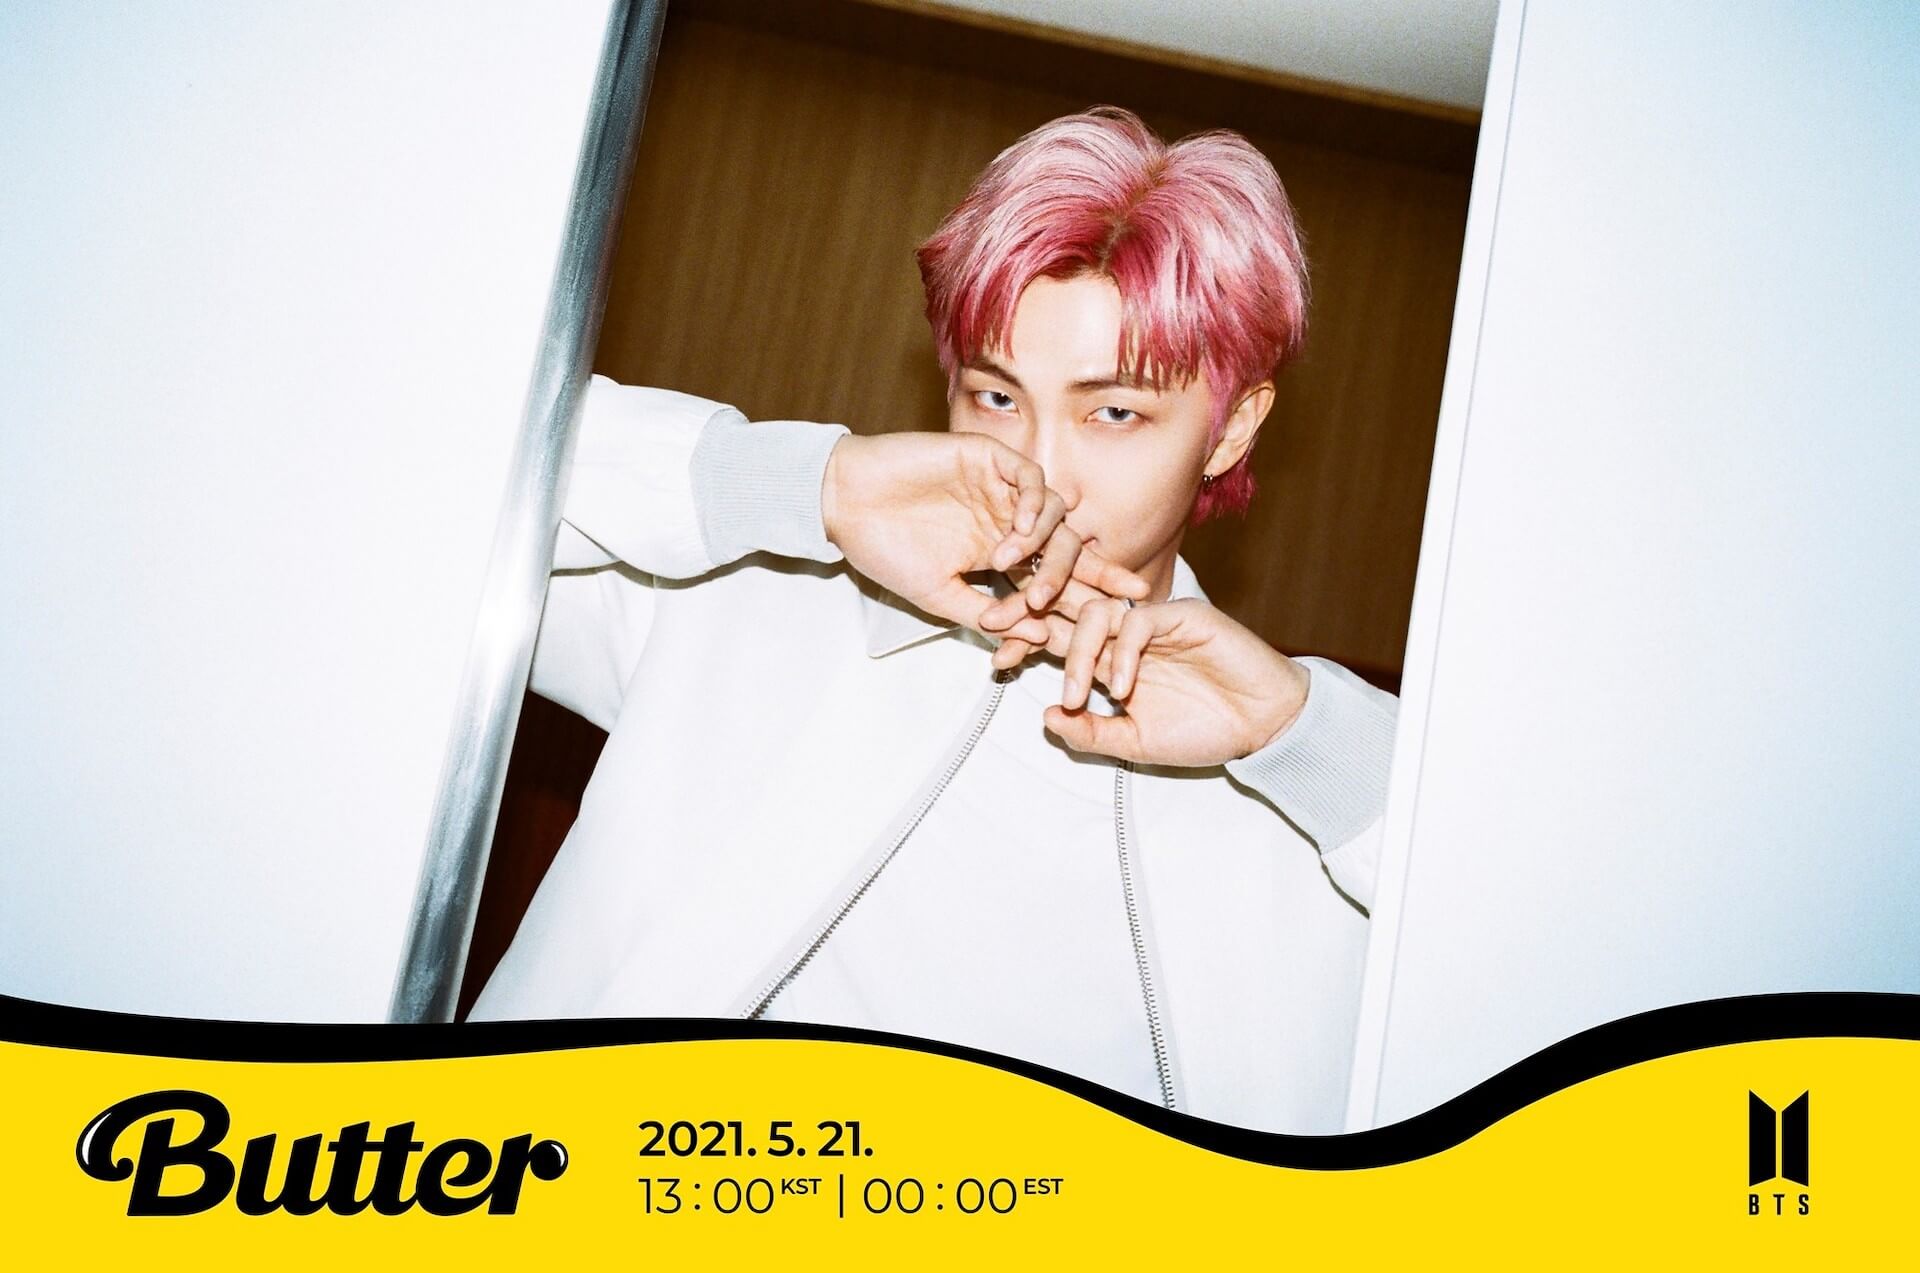 BTSのニューシングル“Butter”のメンバー別ティーザーフォトが公開！初回はRMとJUNG KOOK music210512_bts_butter_2